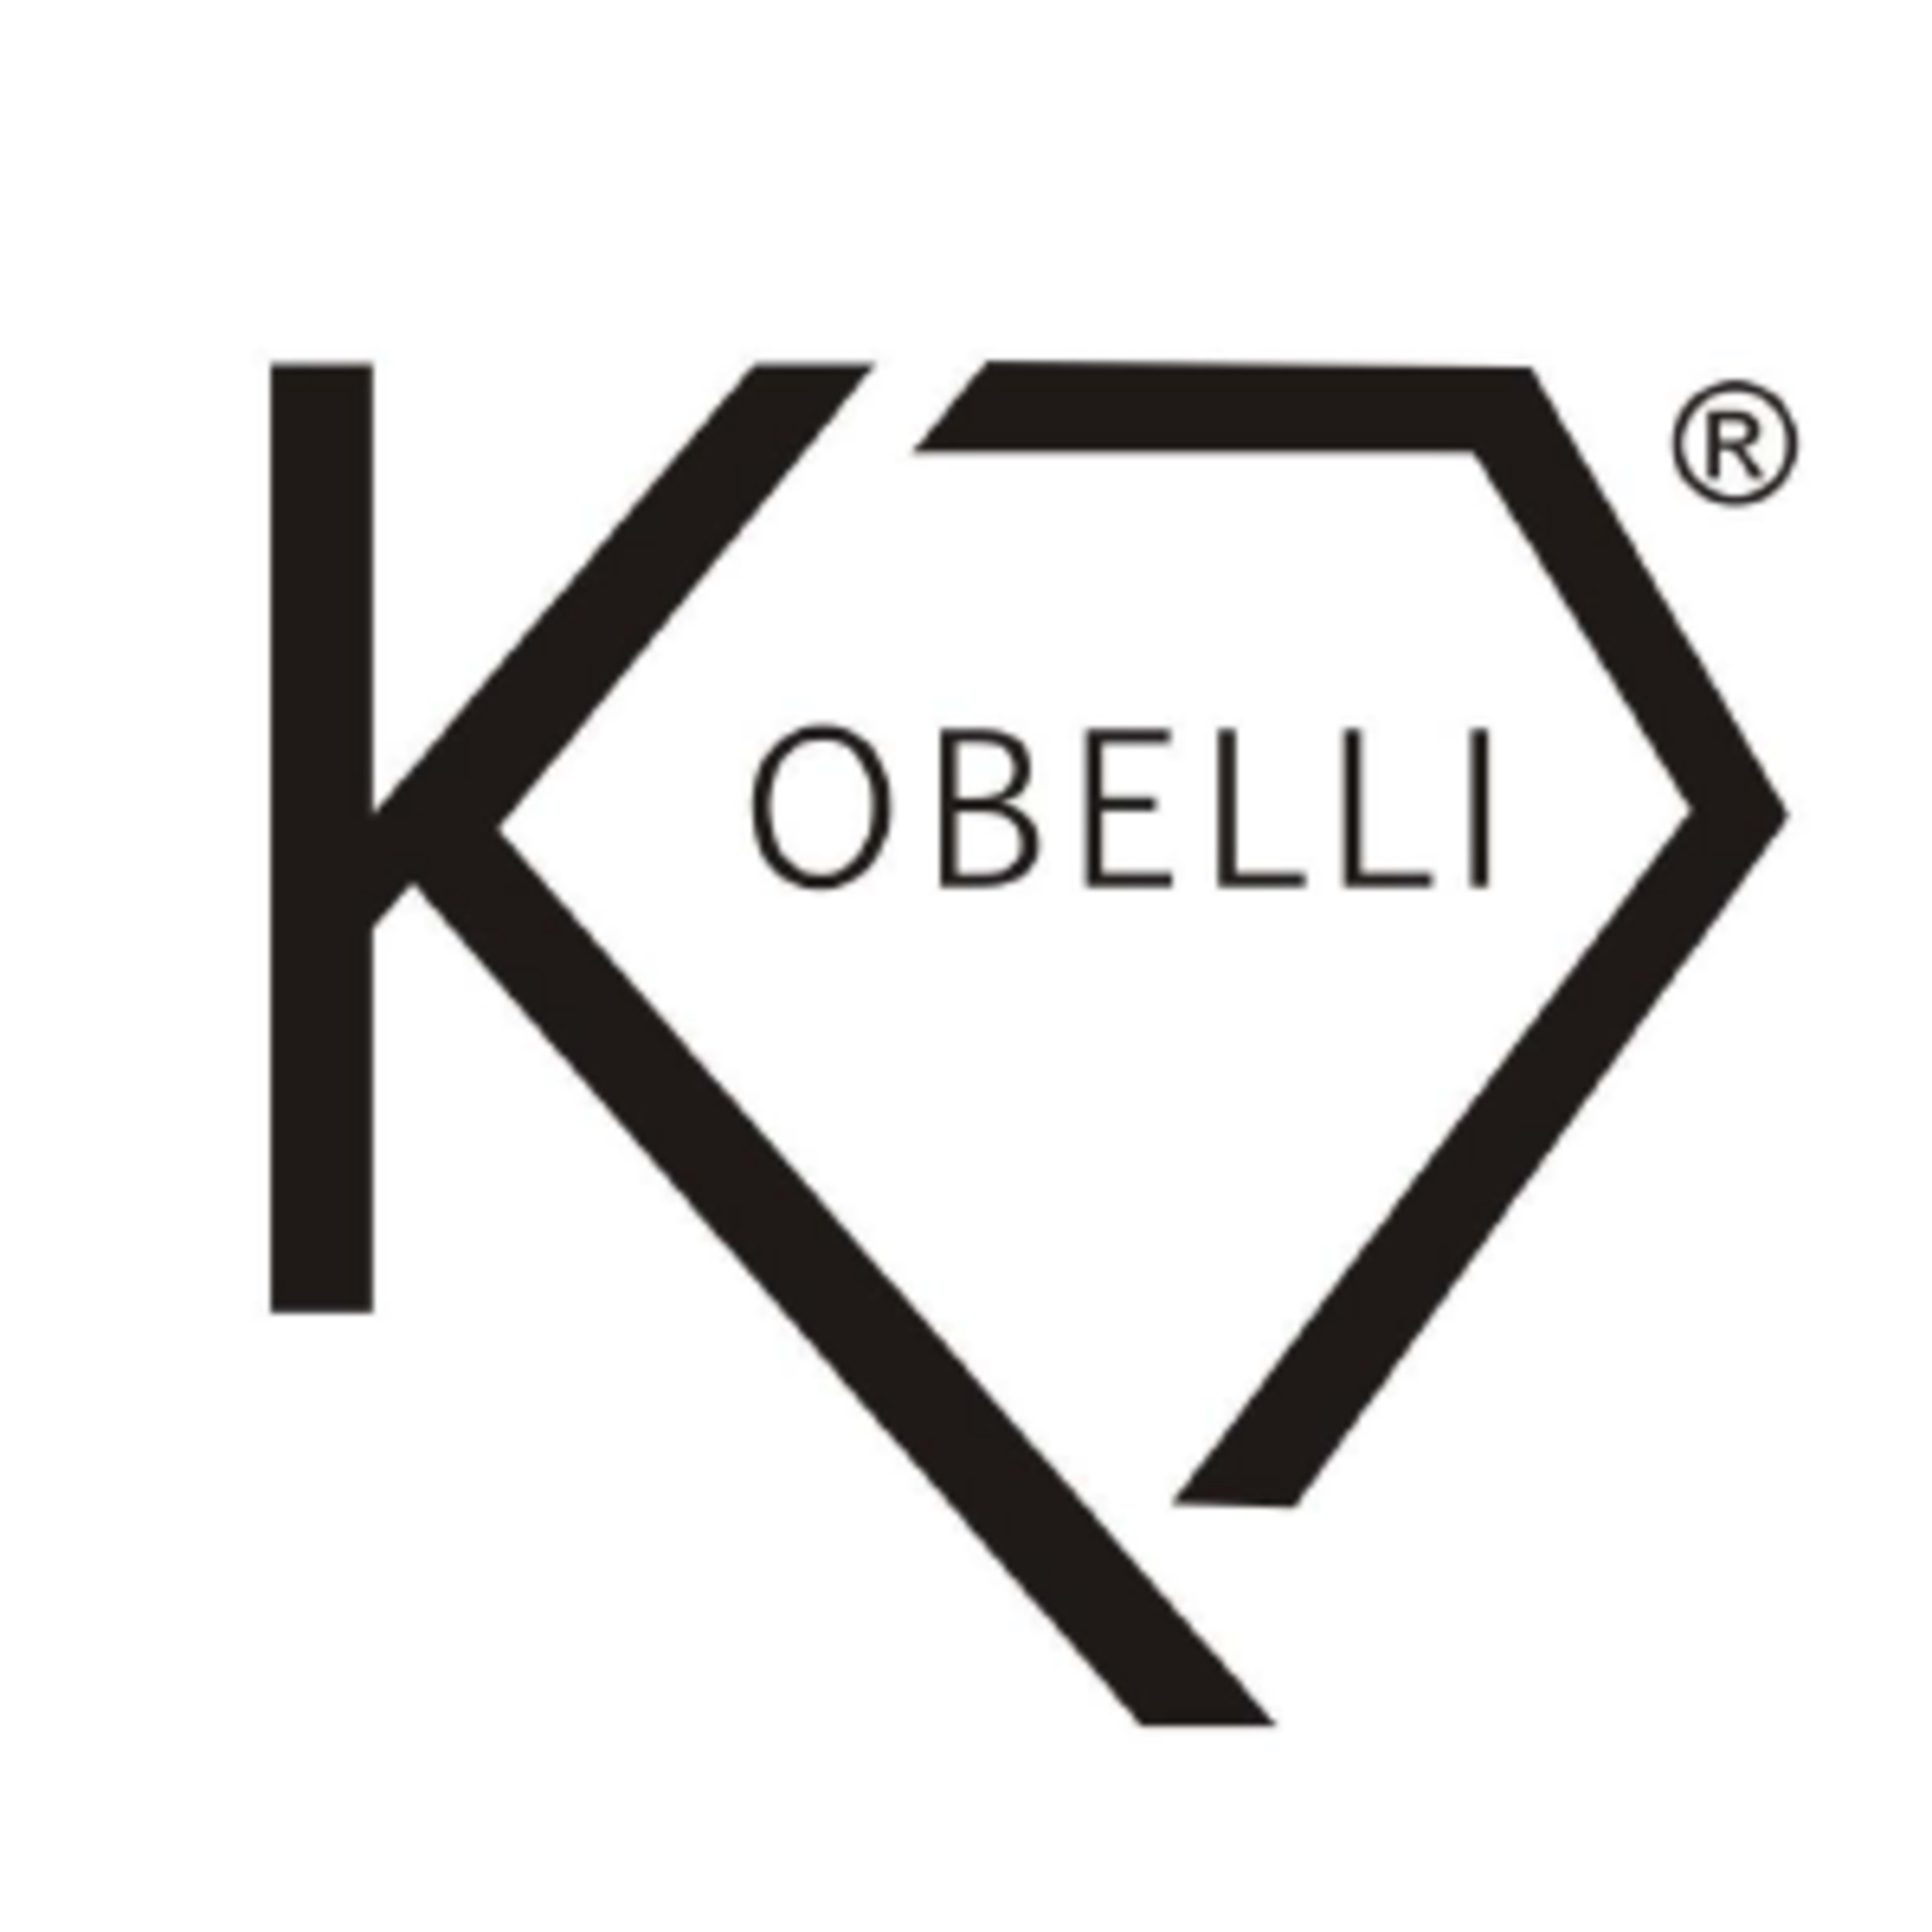 Kobelli Code